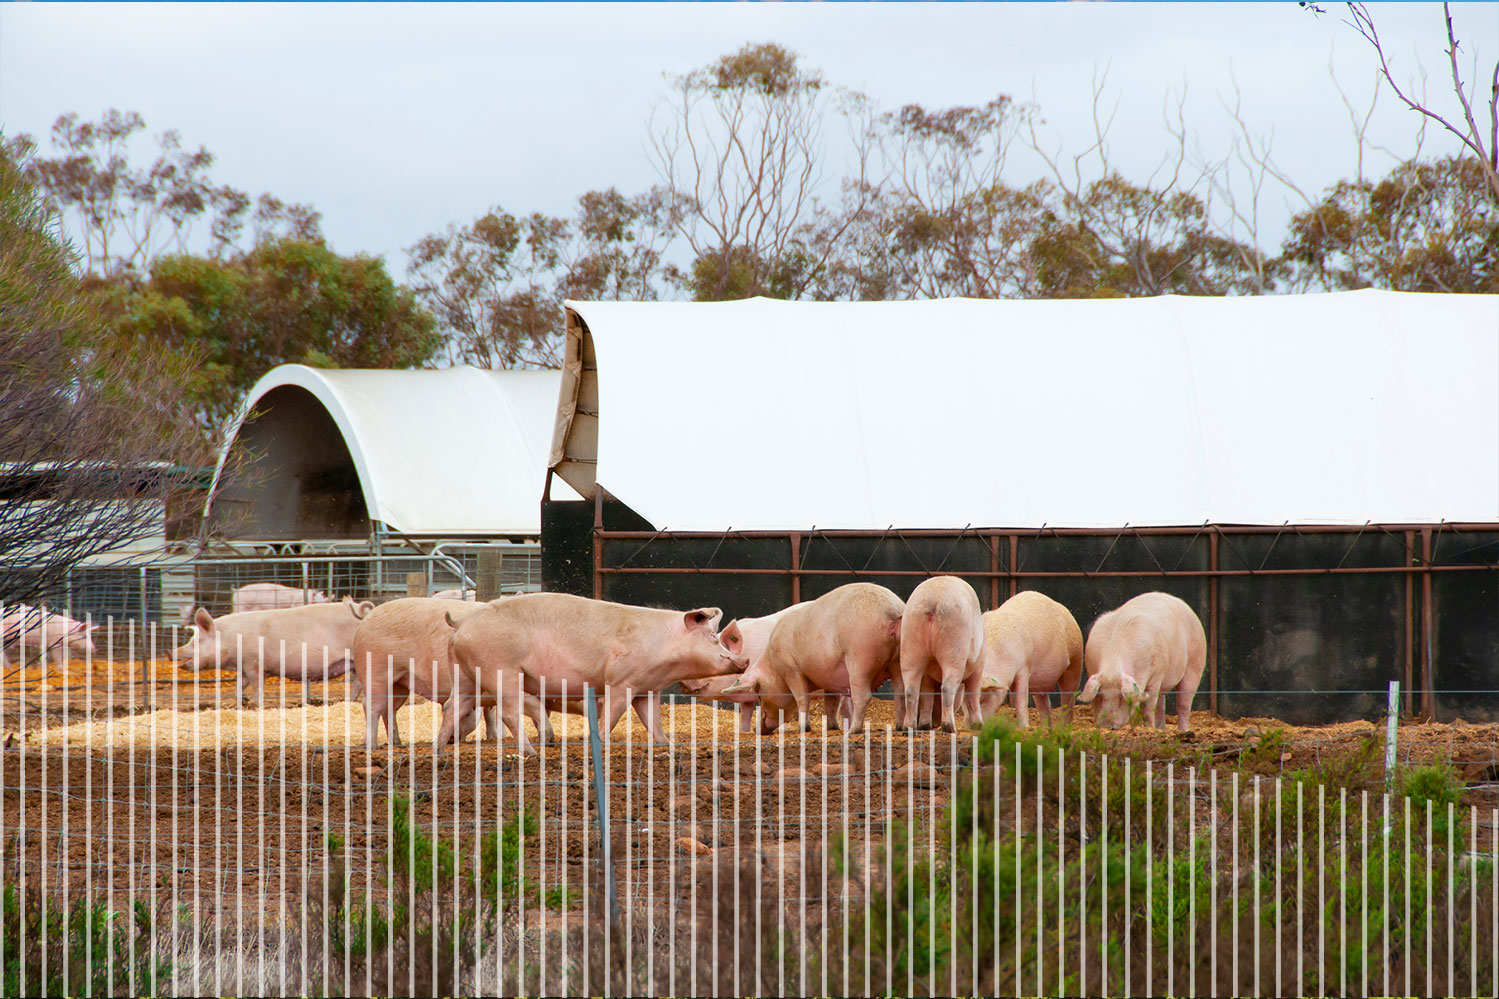 Pigs in Pen at Organic Farm